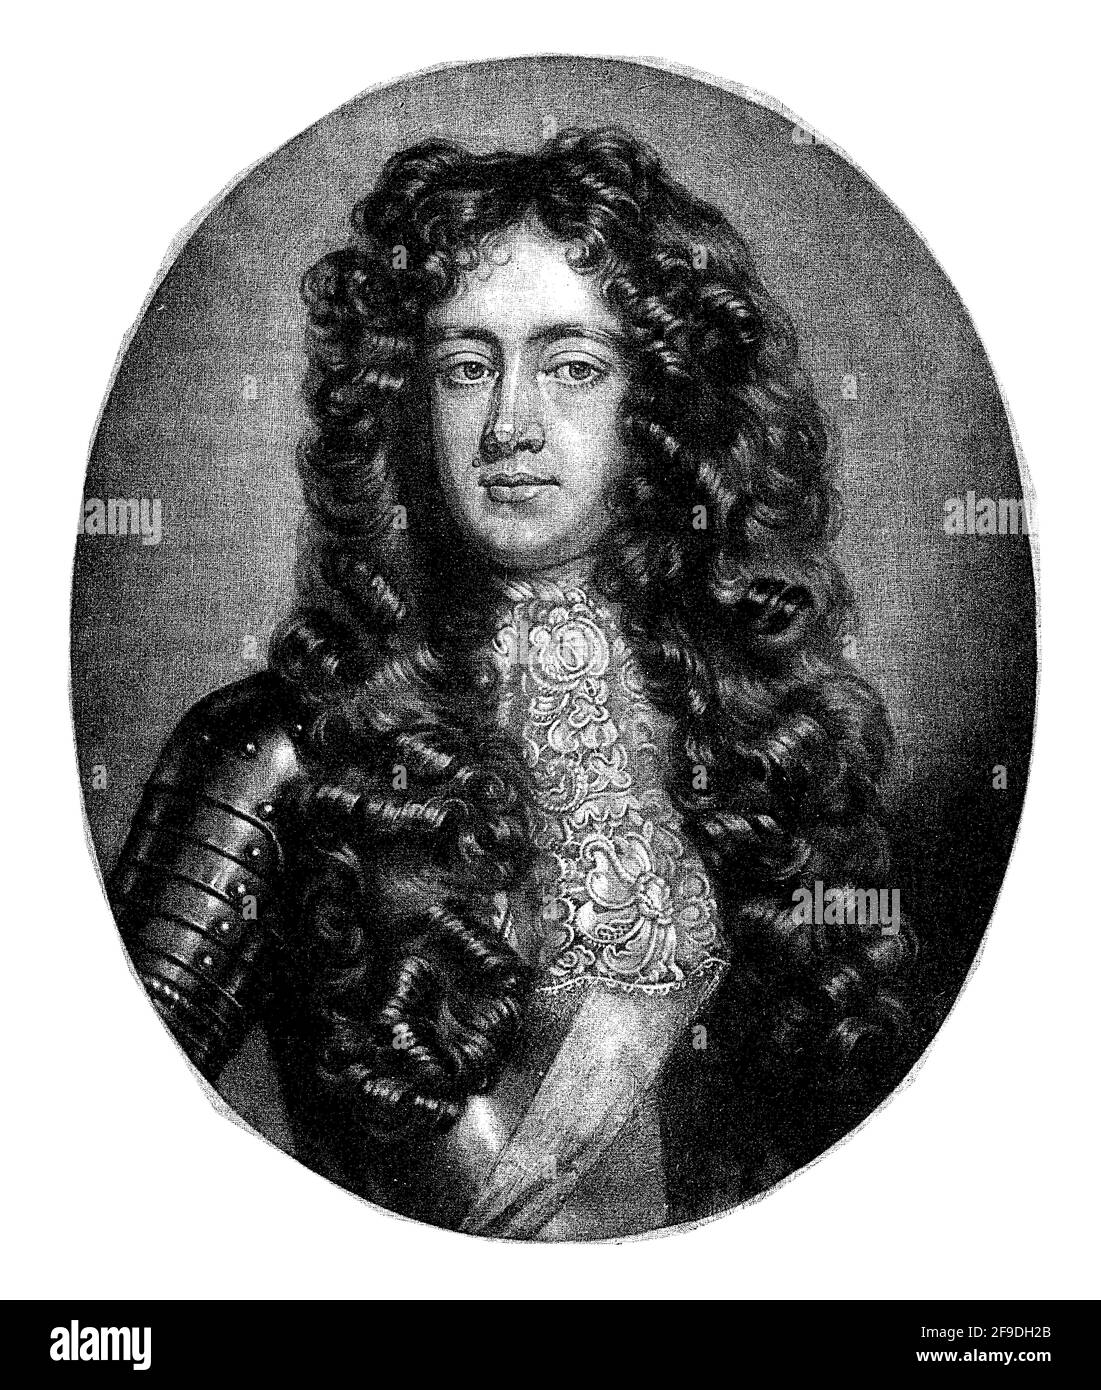 Portrait of James Scott, Duke of Monmouth, Jan van der Vaart, after Willem Wissing, 1682 - 1721 Stock Photo